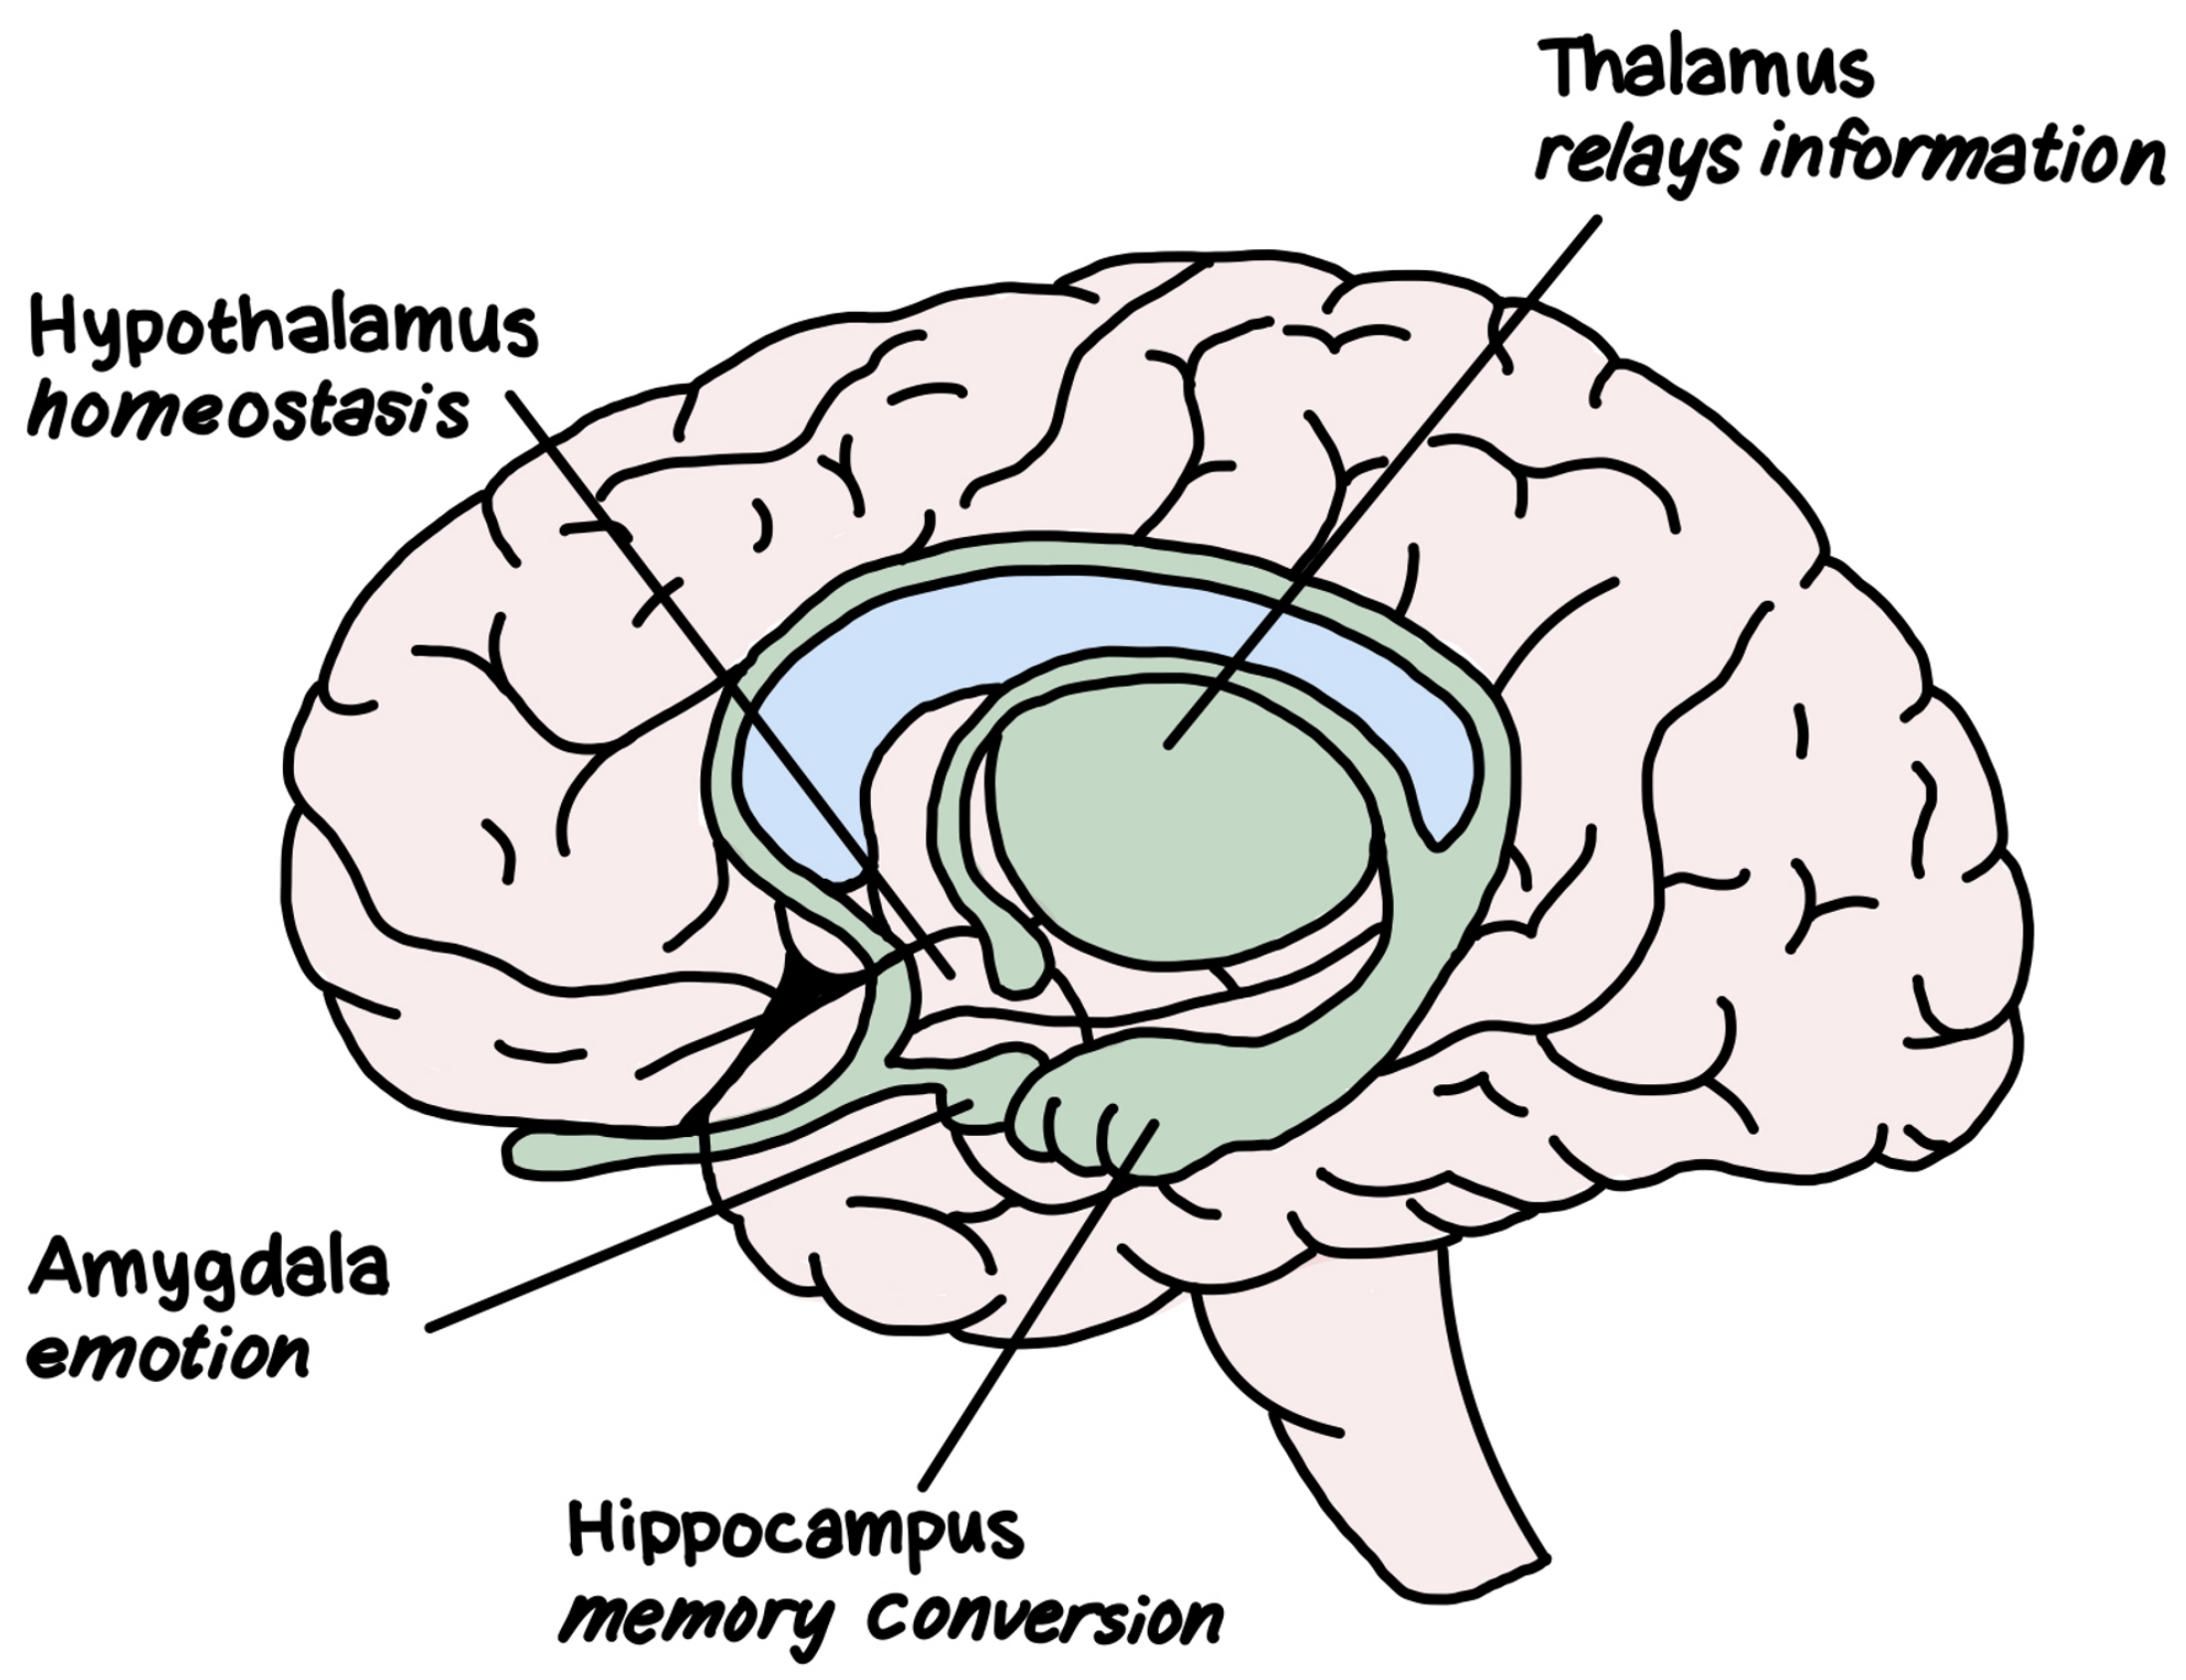 <ul><li><p>Controls thought and reason (what makes us human)</p></li><li><p>Contains thalamus, hypothalamus, amygdala, and hippocampus</p></li></ul>